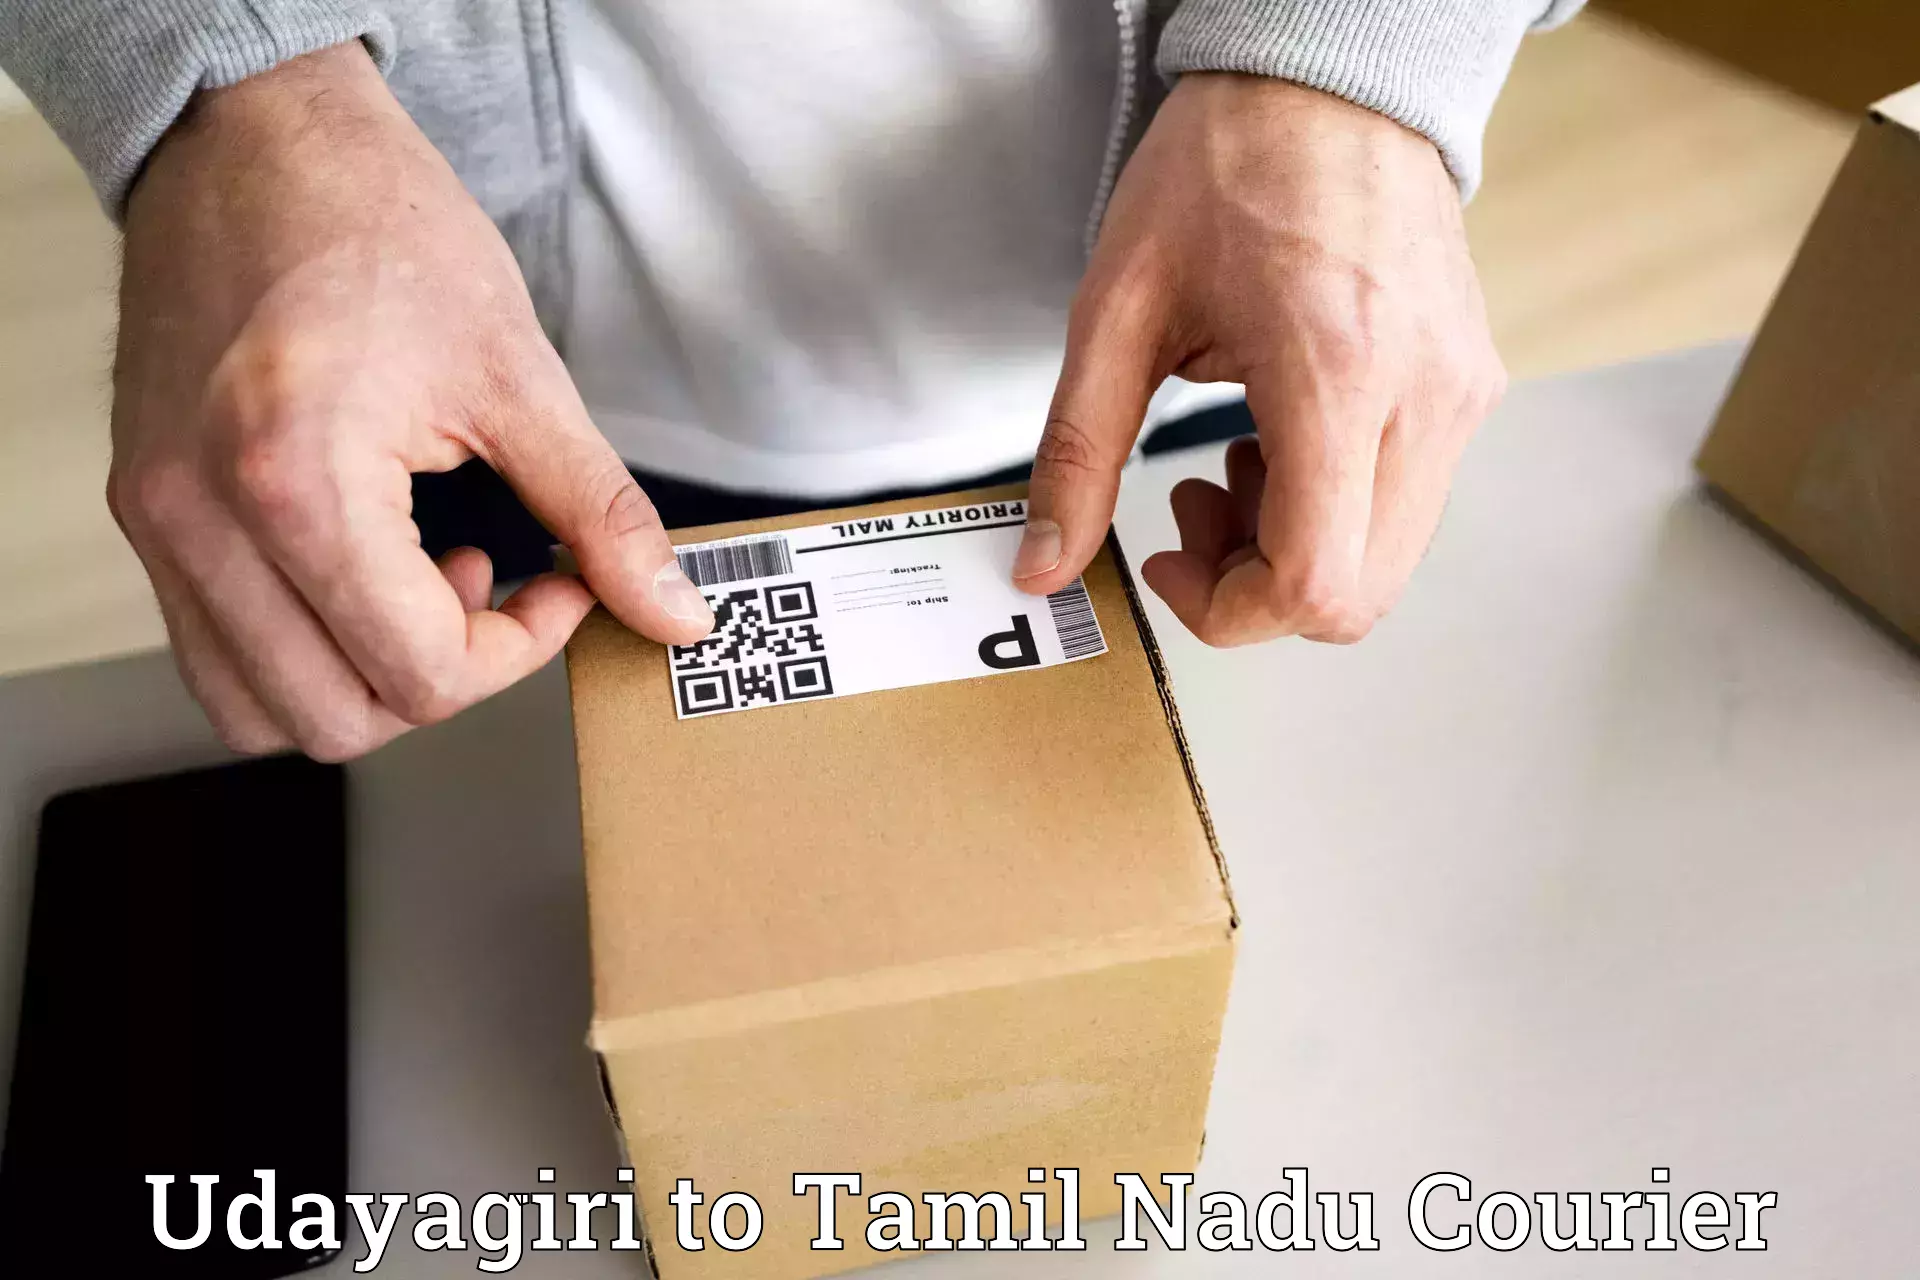 Reliable delivery network Udayagiri to Polur